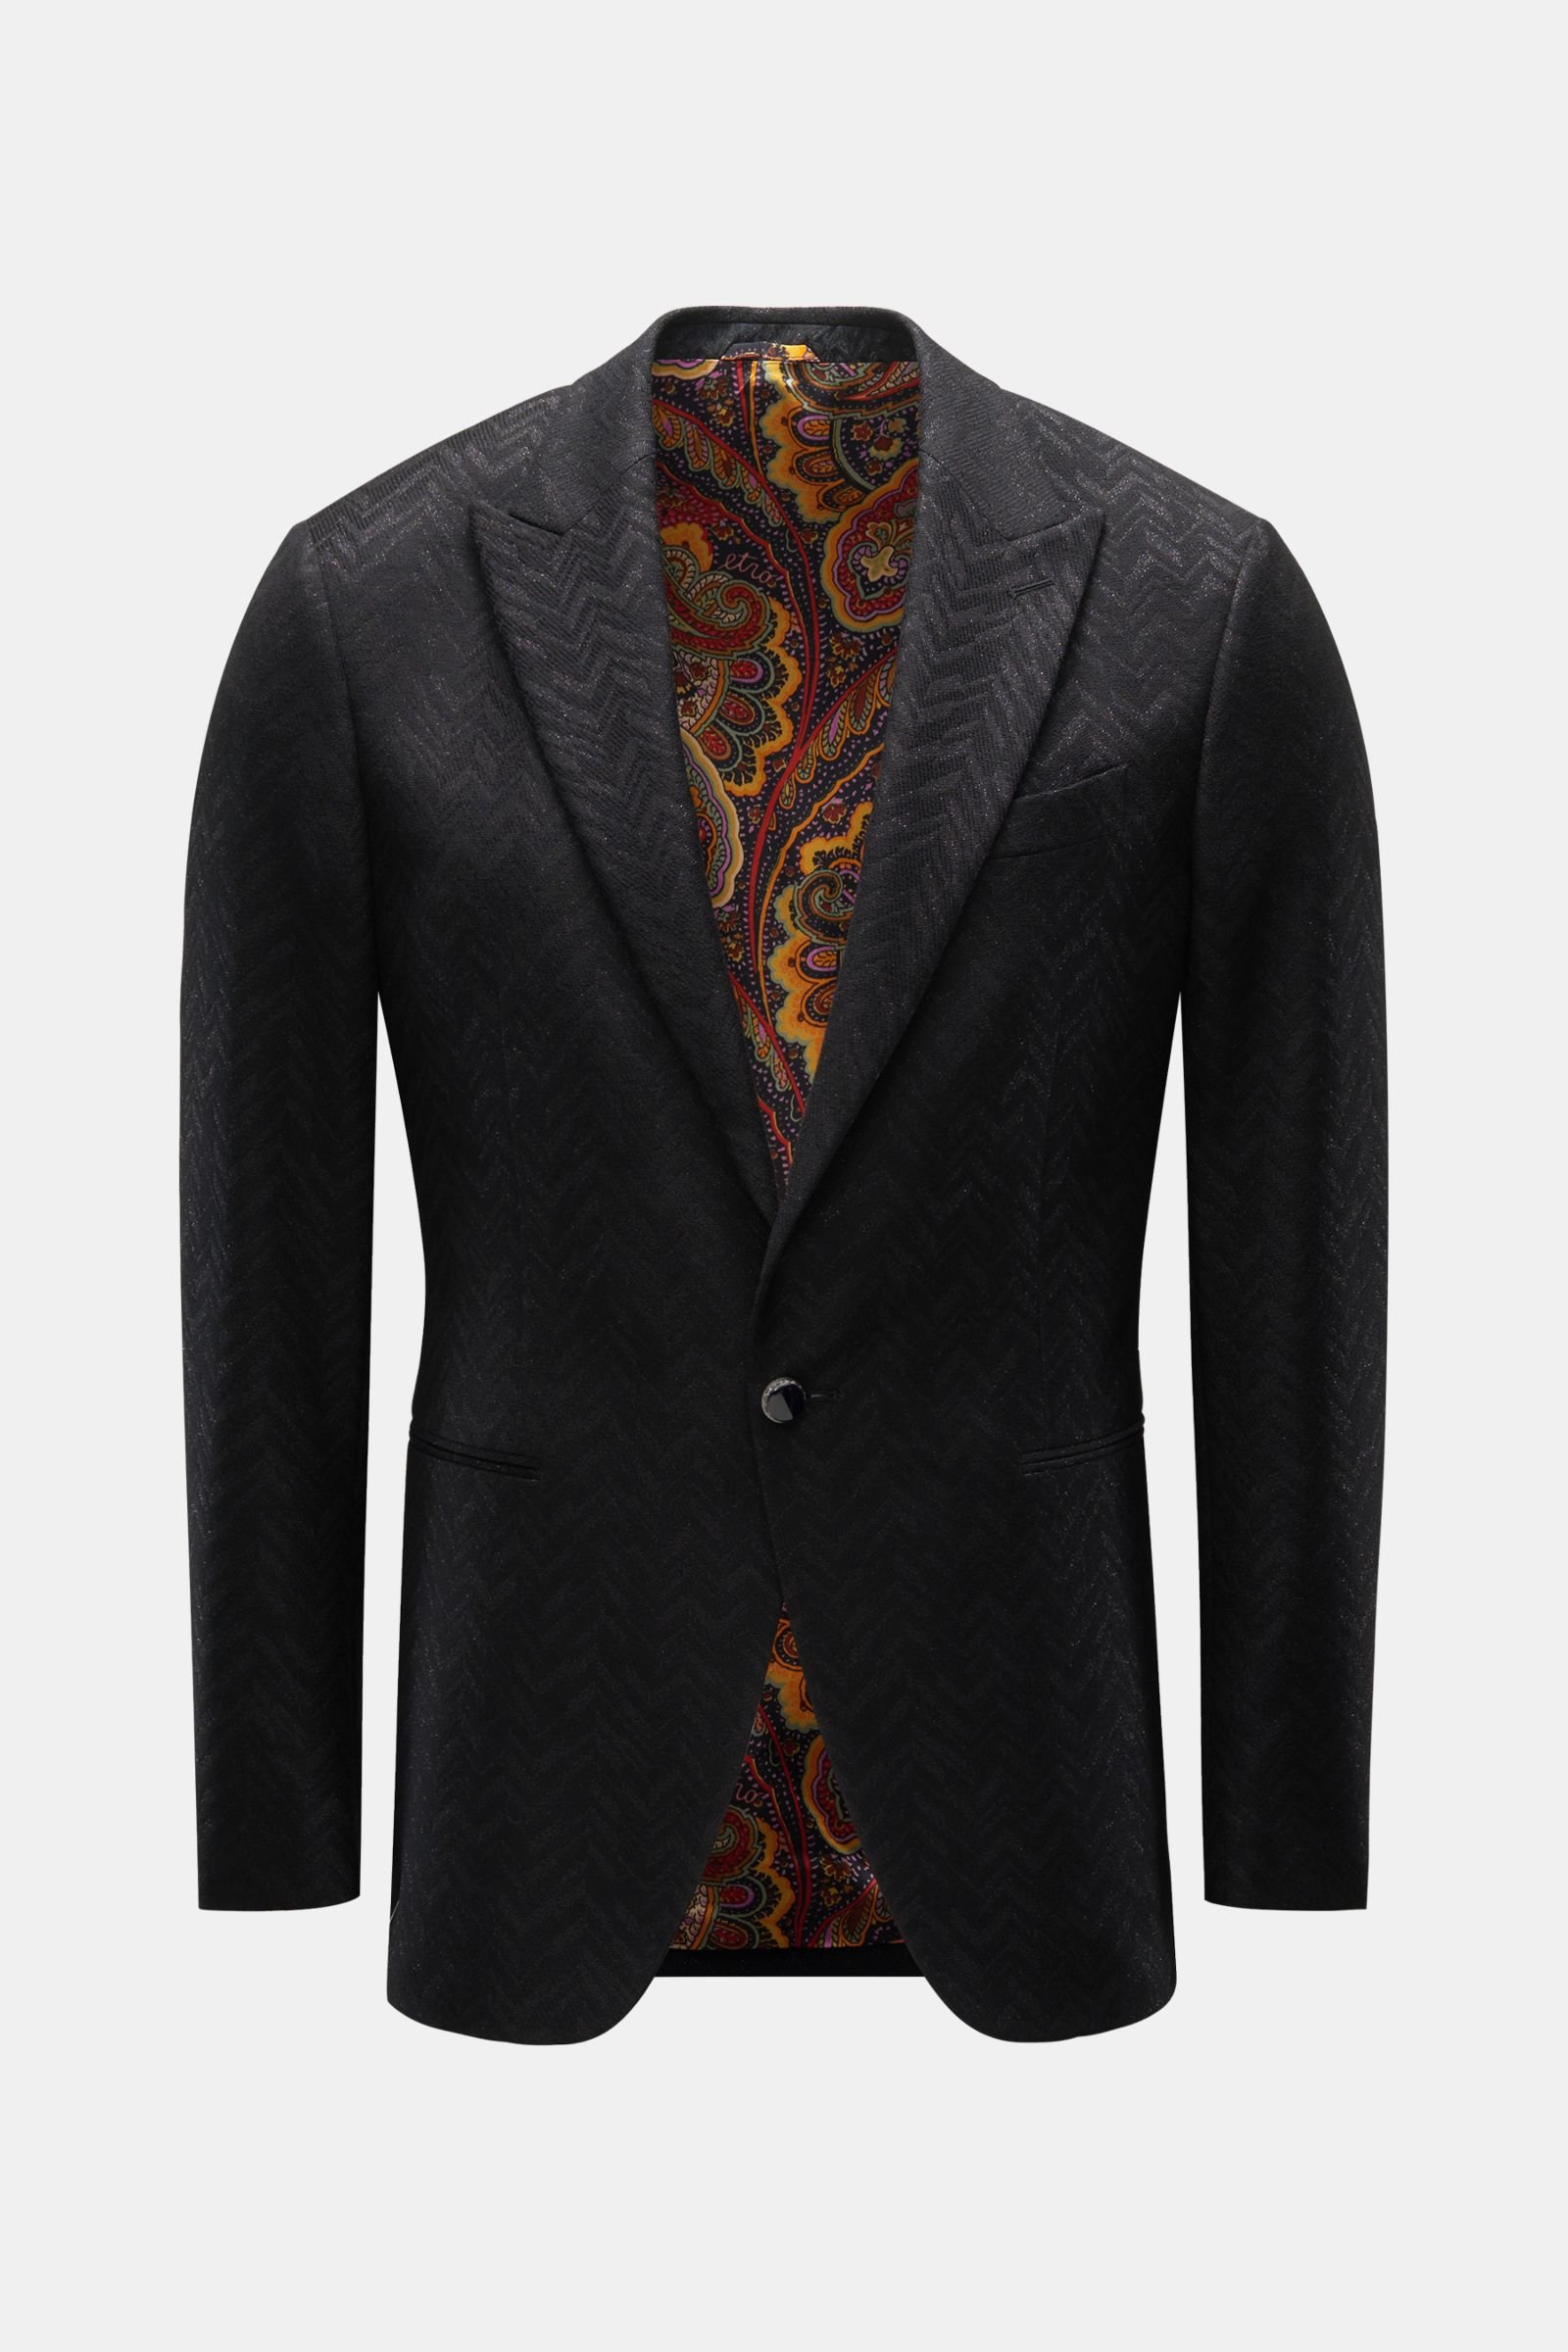 Tuxedo smart-casual jacket black patterned